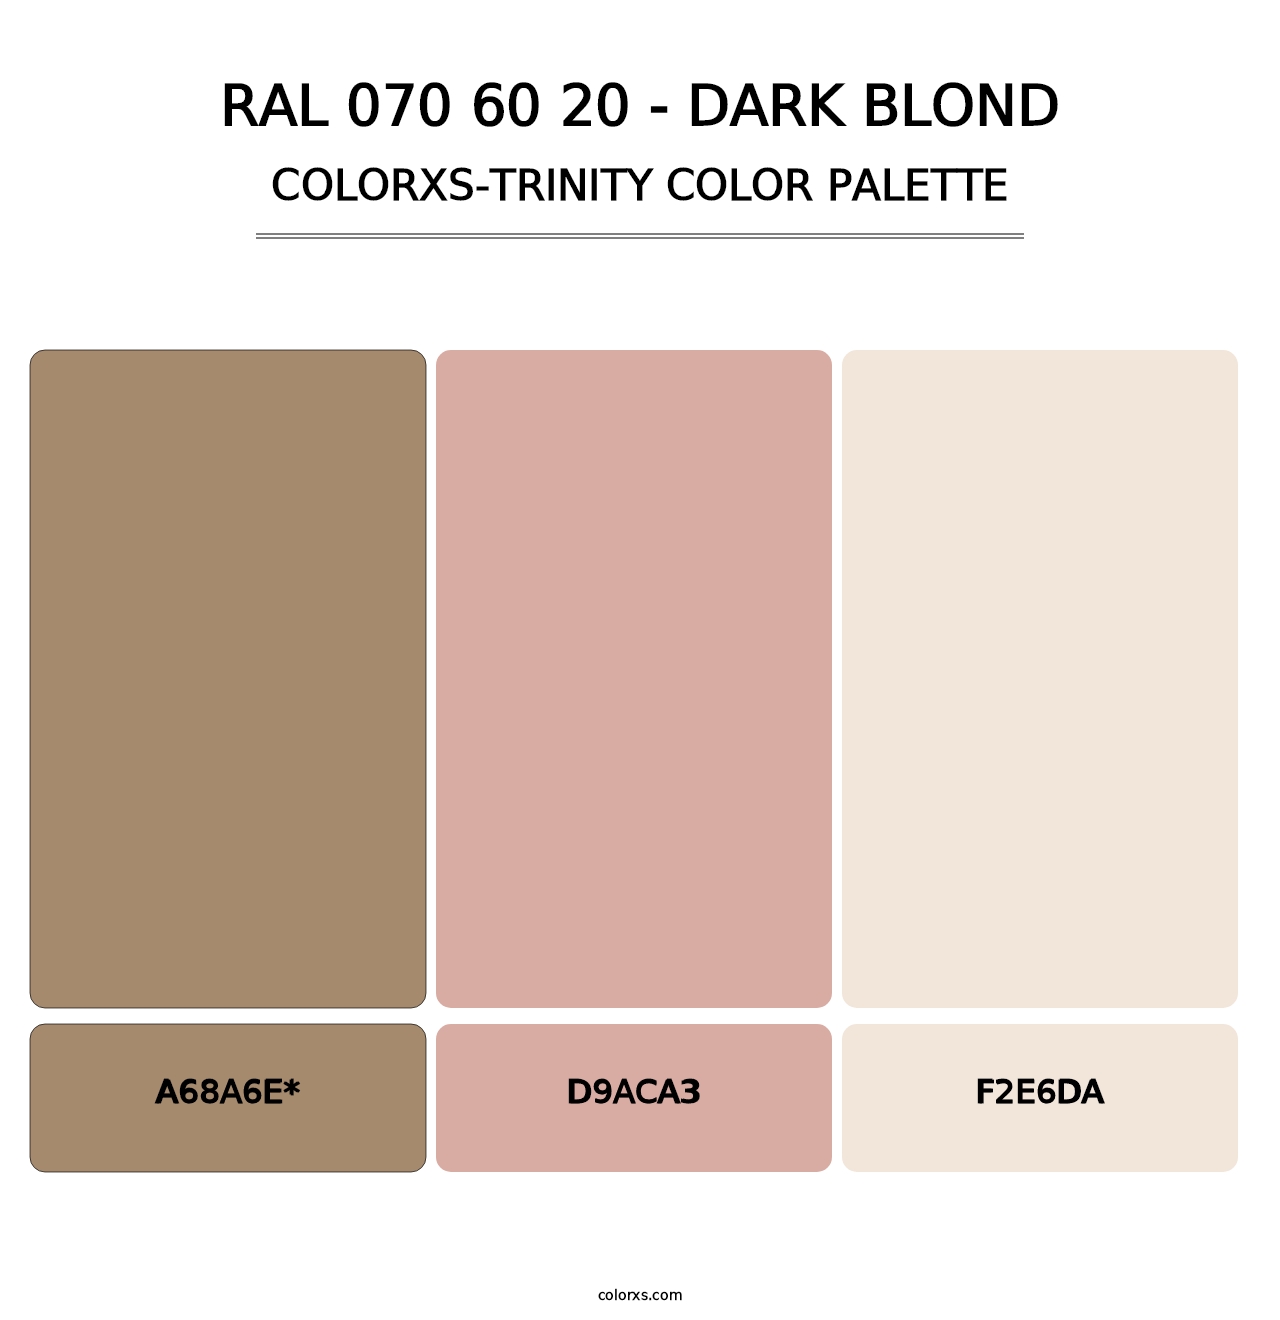 RAL 070 60 20 - Dark Blond - Colorxs Trinity Palette